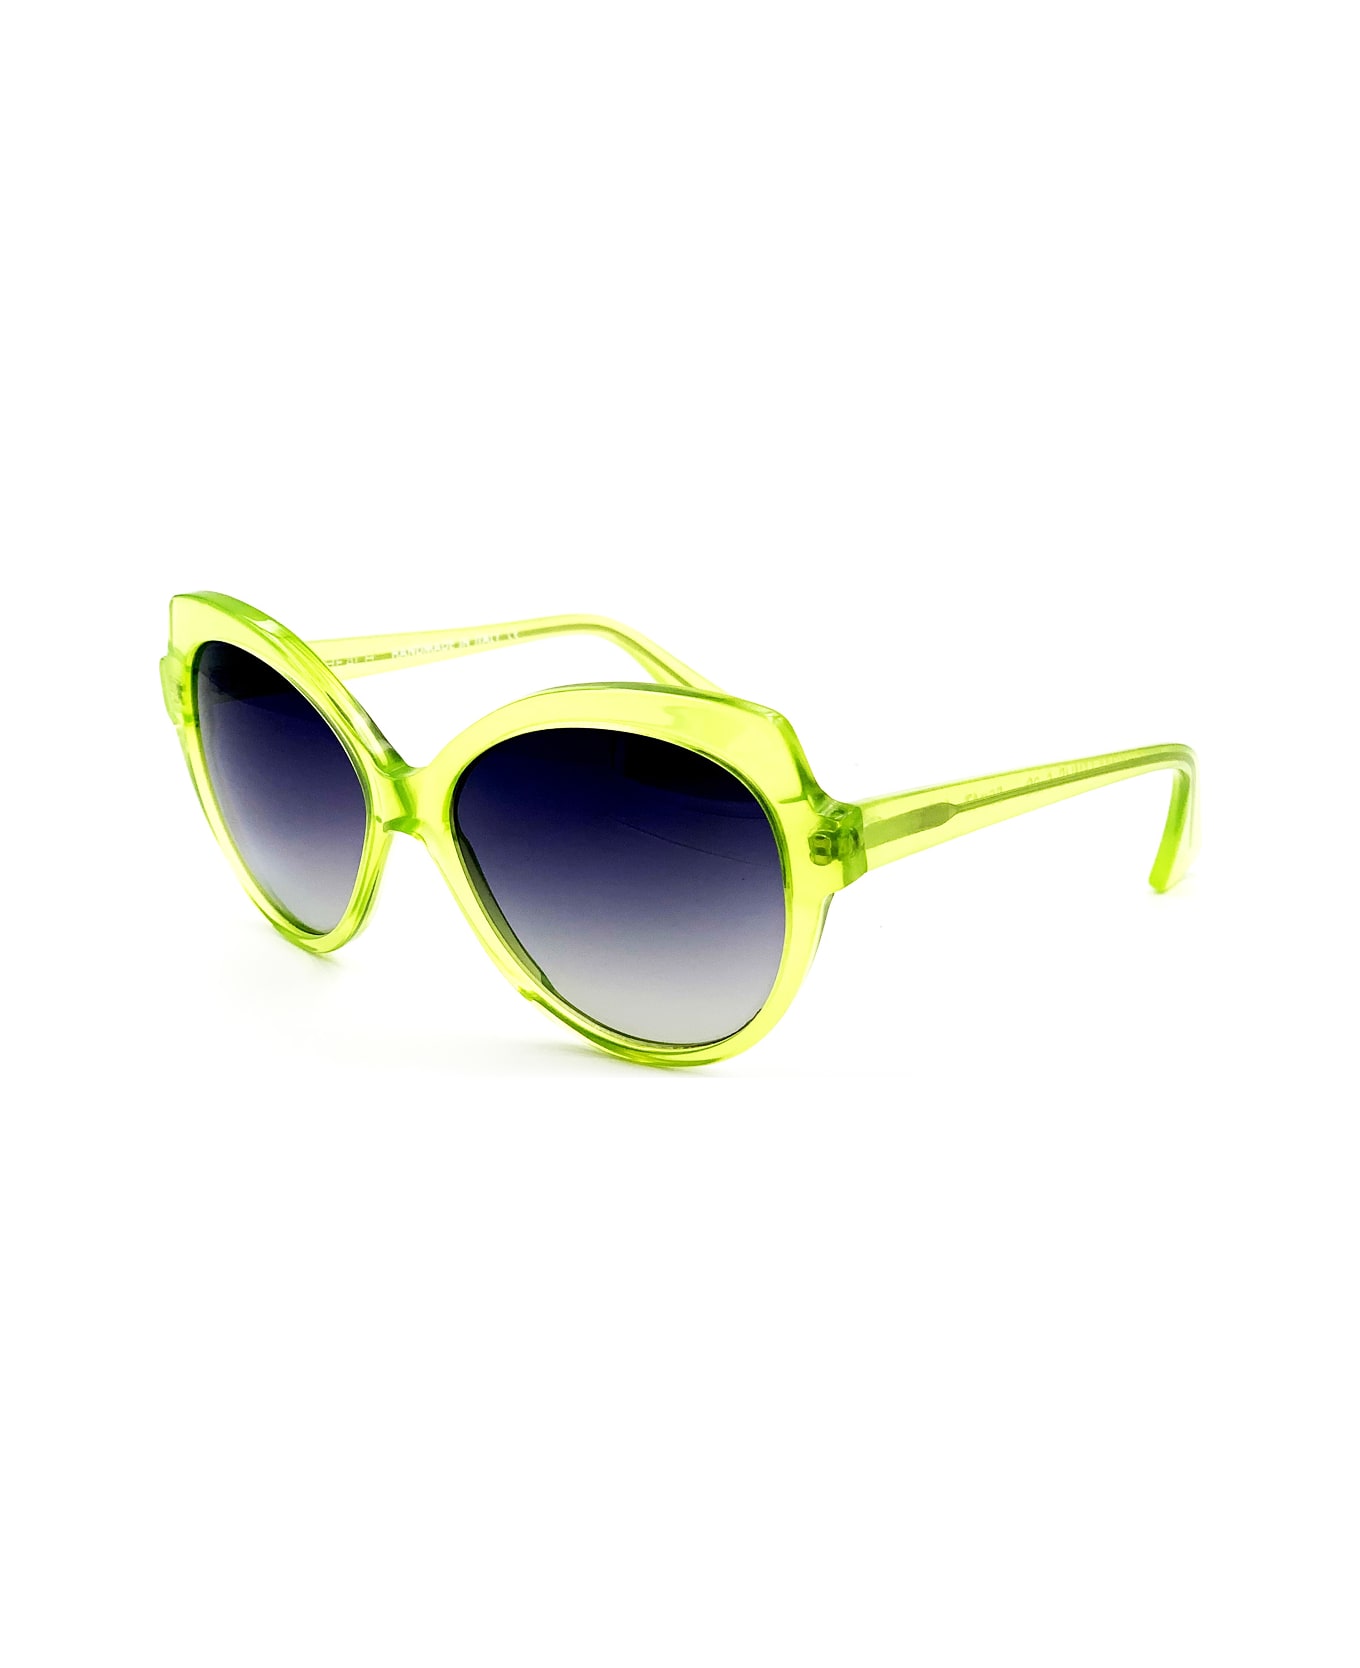 Silvian Heach Cosmopolitan/s Sunglasses - Giallo